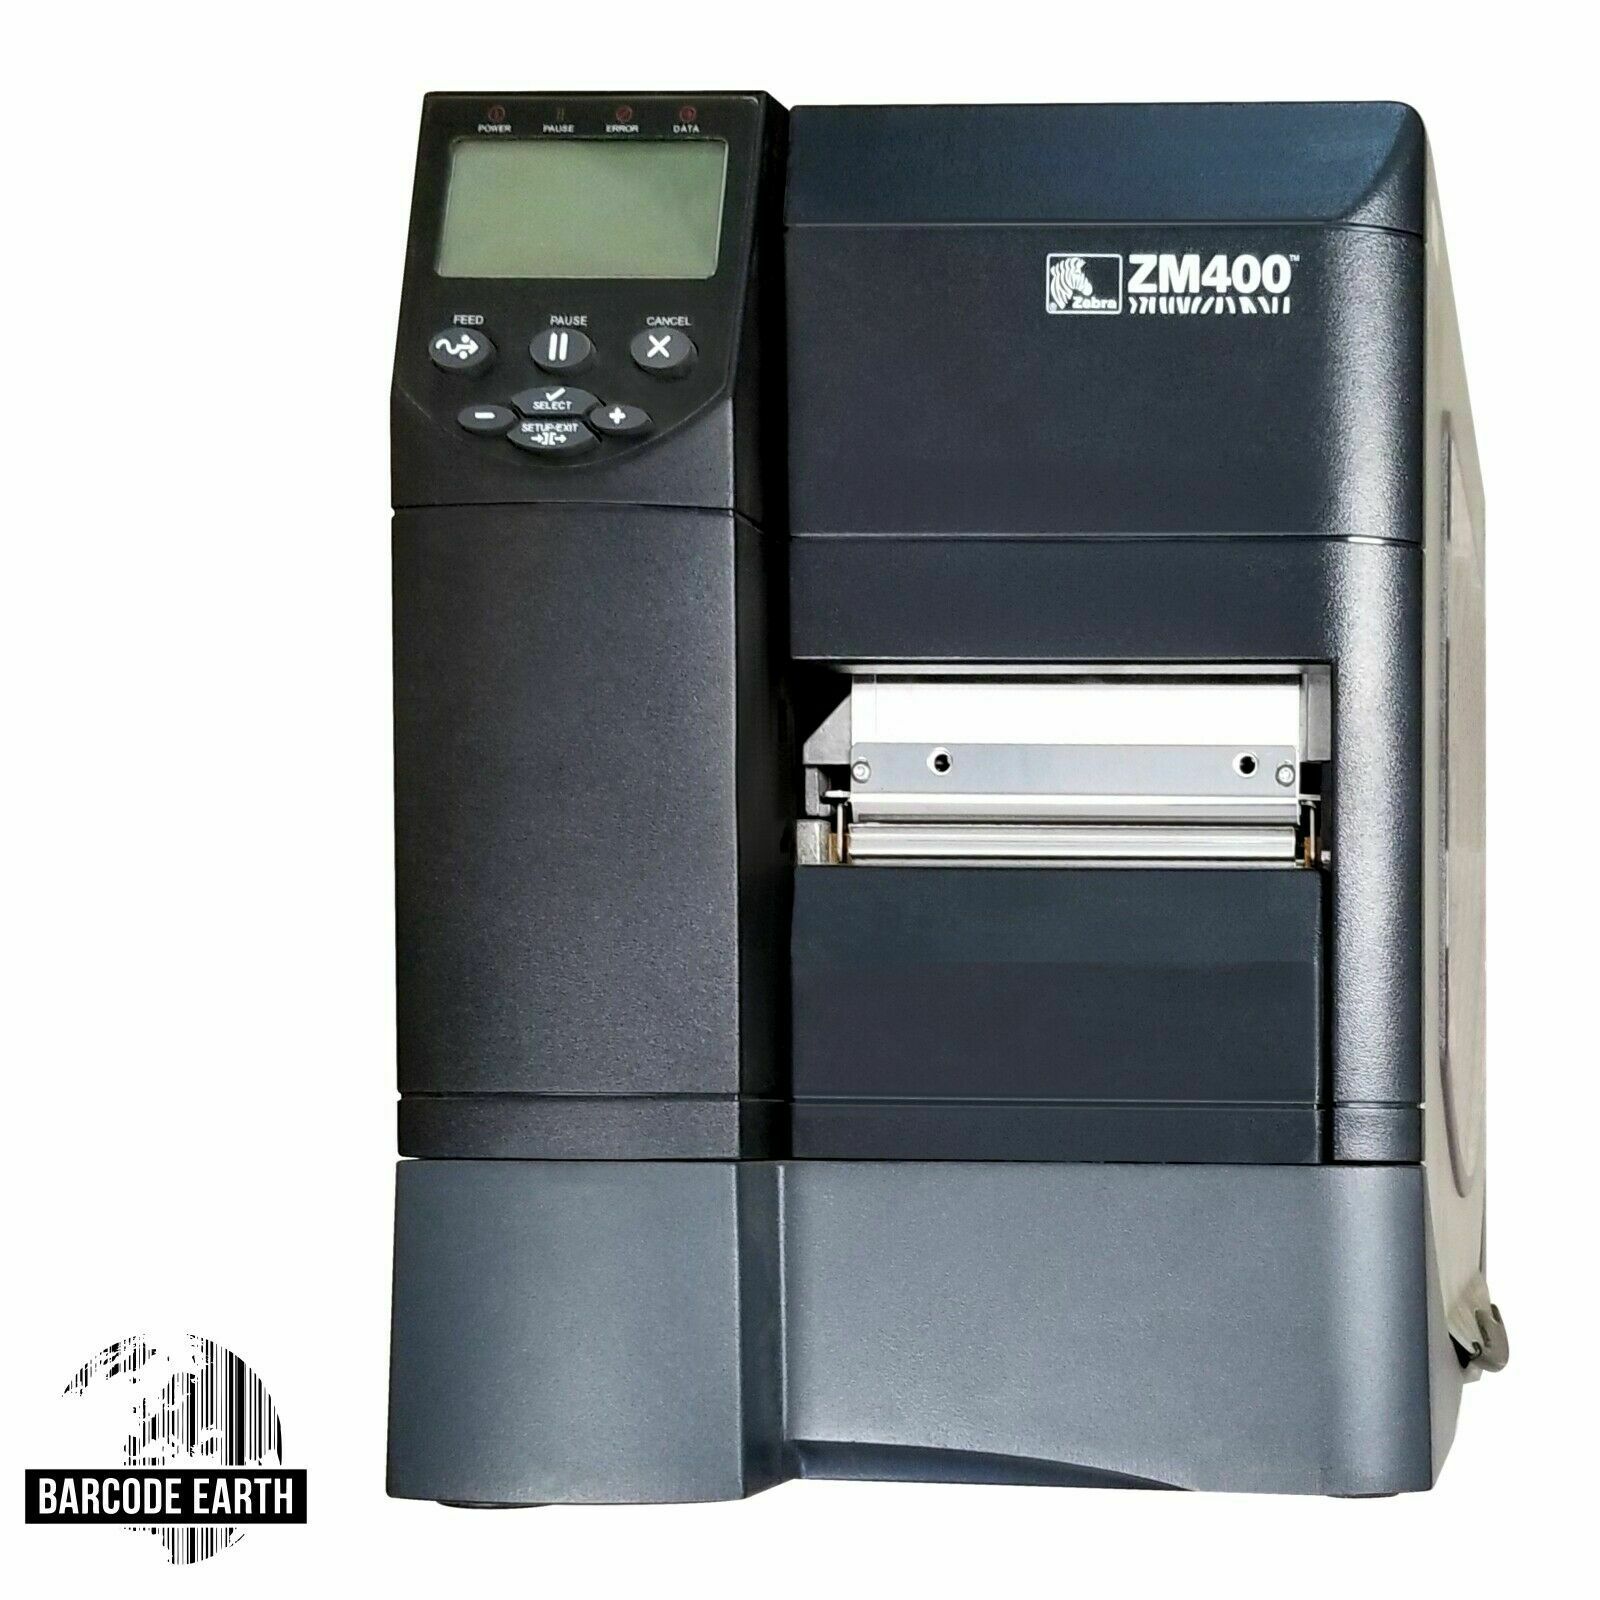 Zebra RZ400 RFID Network Thermal Label Printer Certified Refurbished